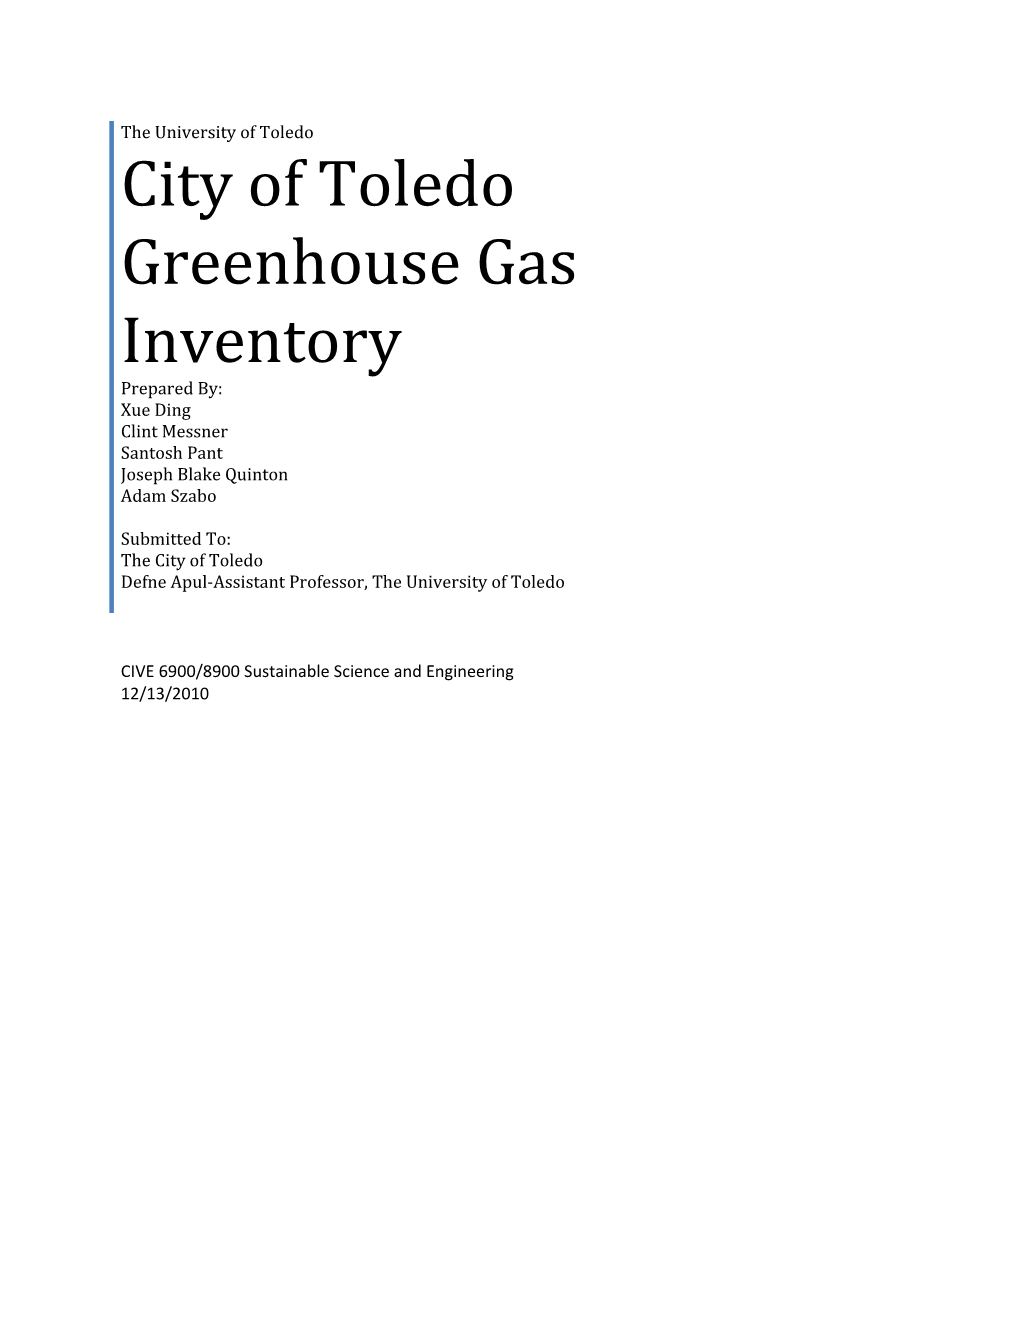 City of Toledo Greenhouse Gas Inventory